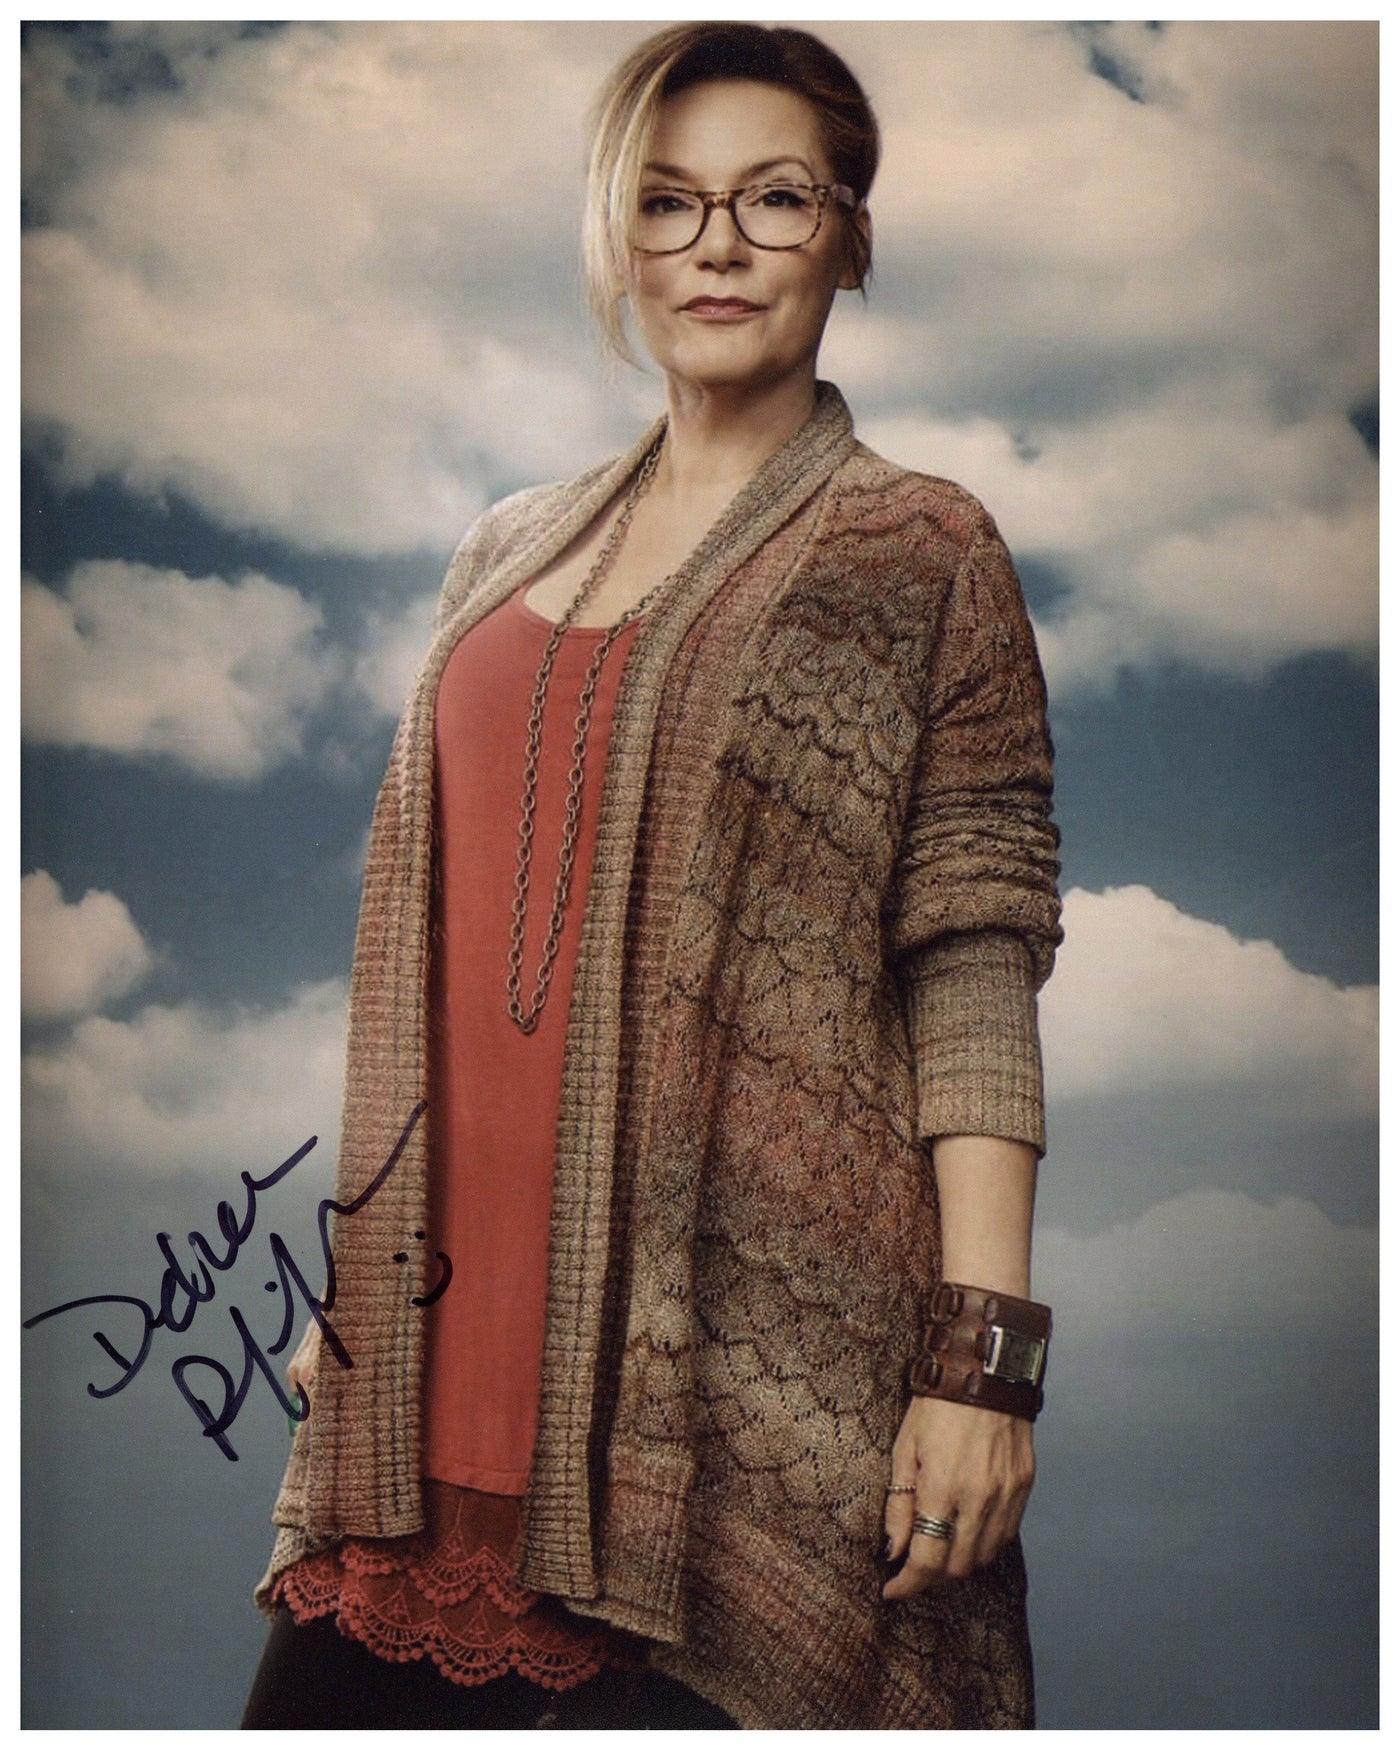 Dedee Pfeiffer Signed 8x10 Photo Big Sky Denise Brisbane Autographed ACOA